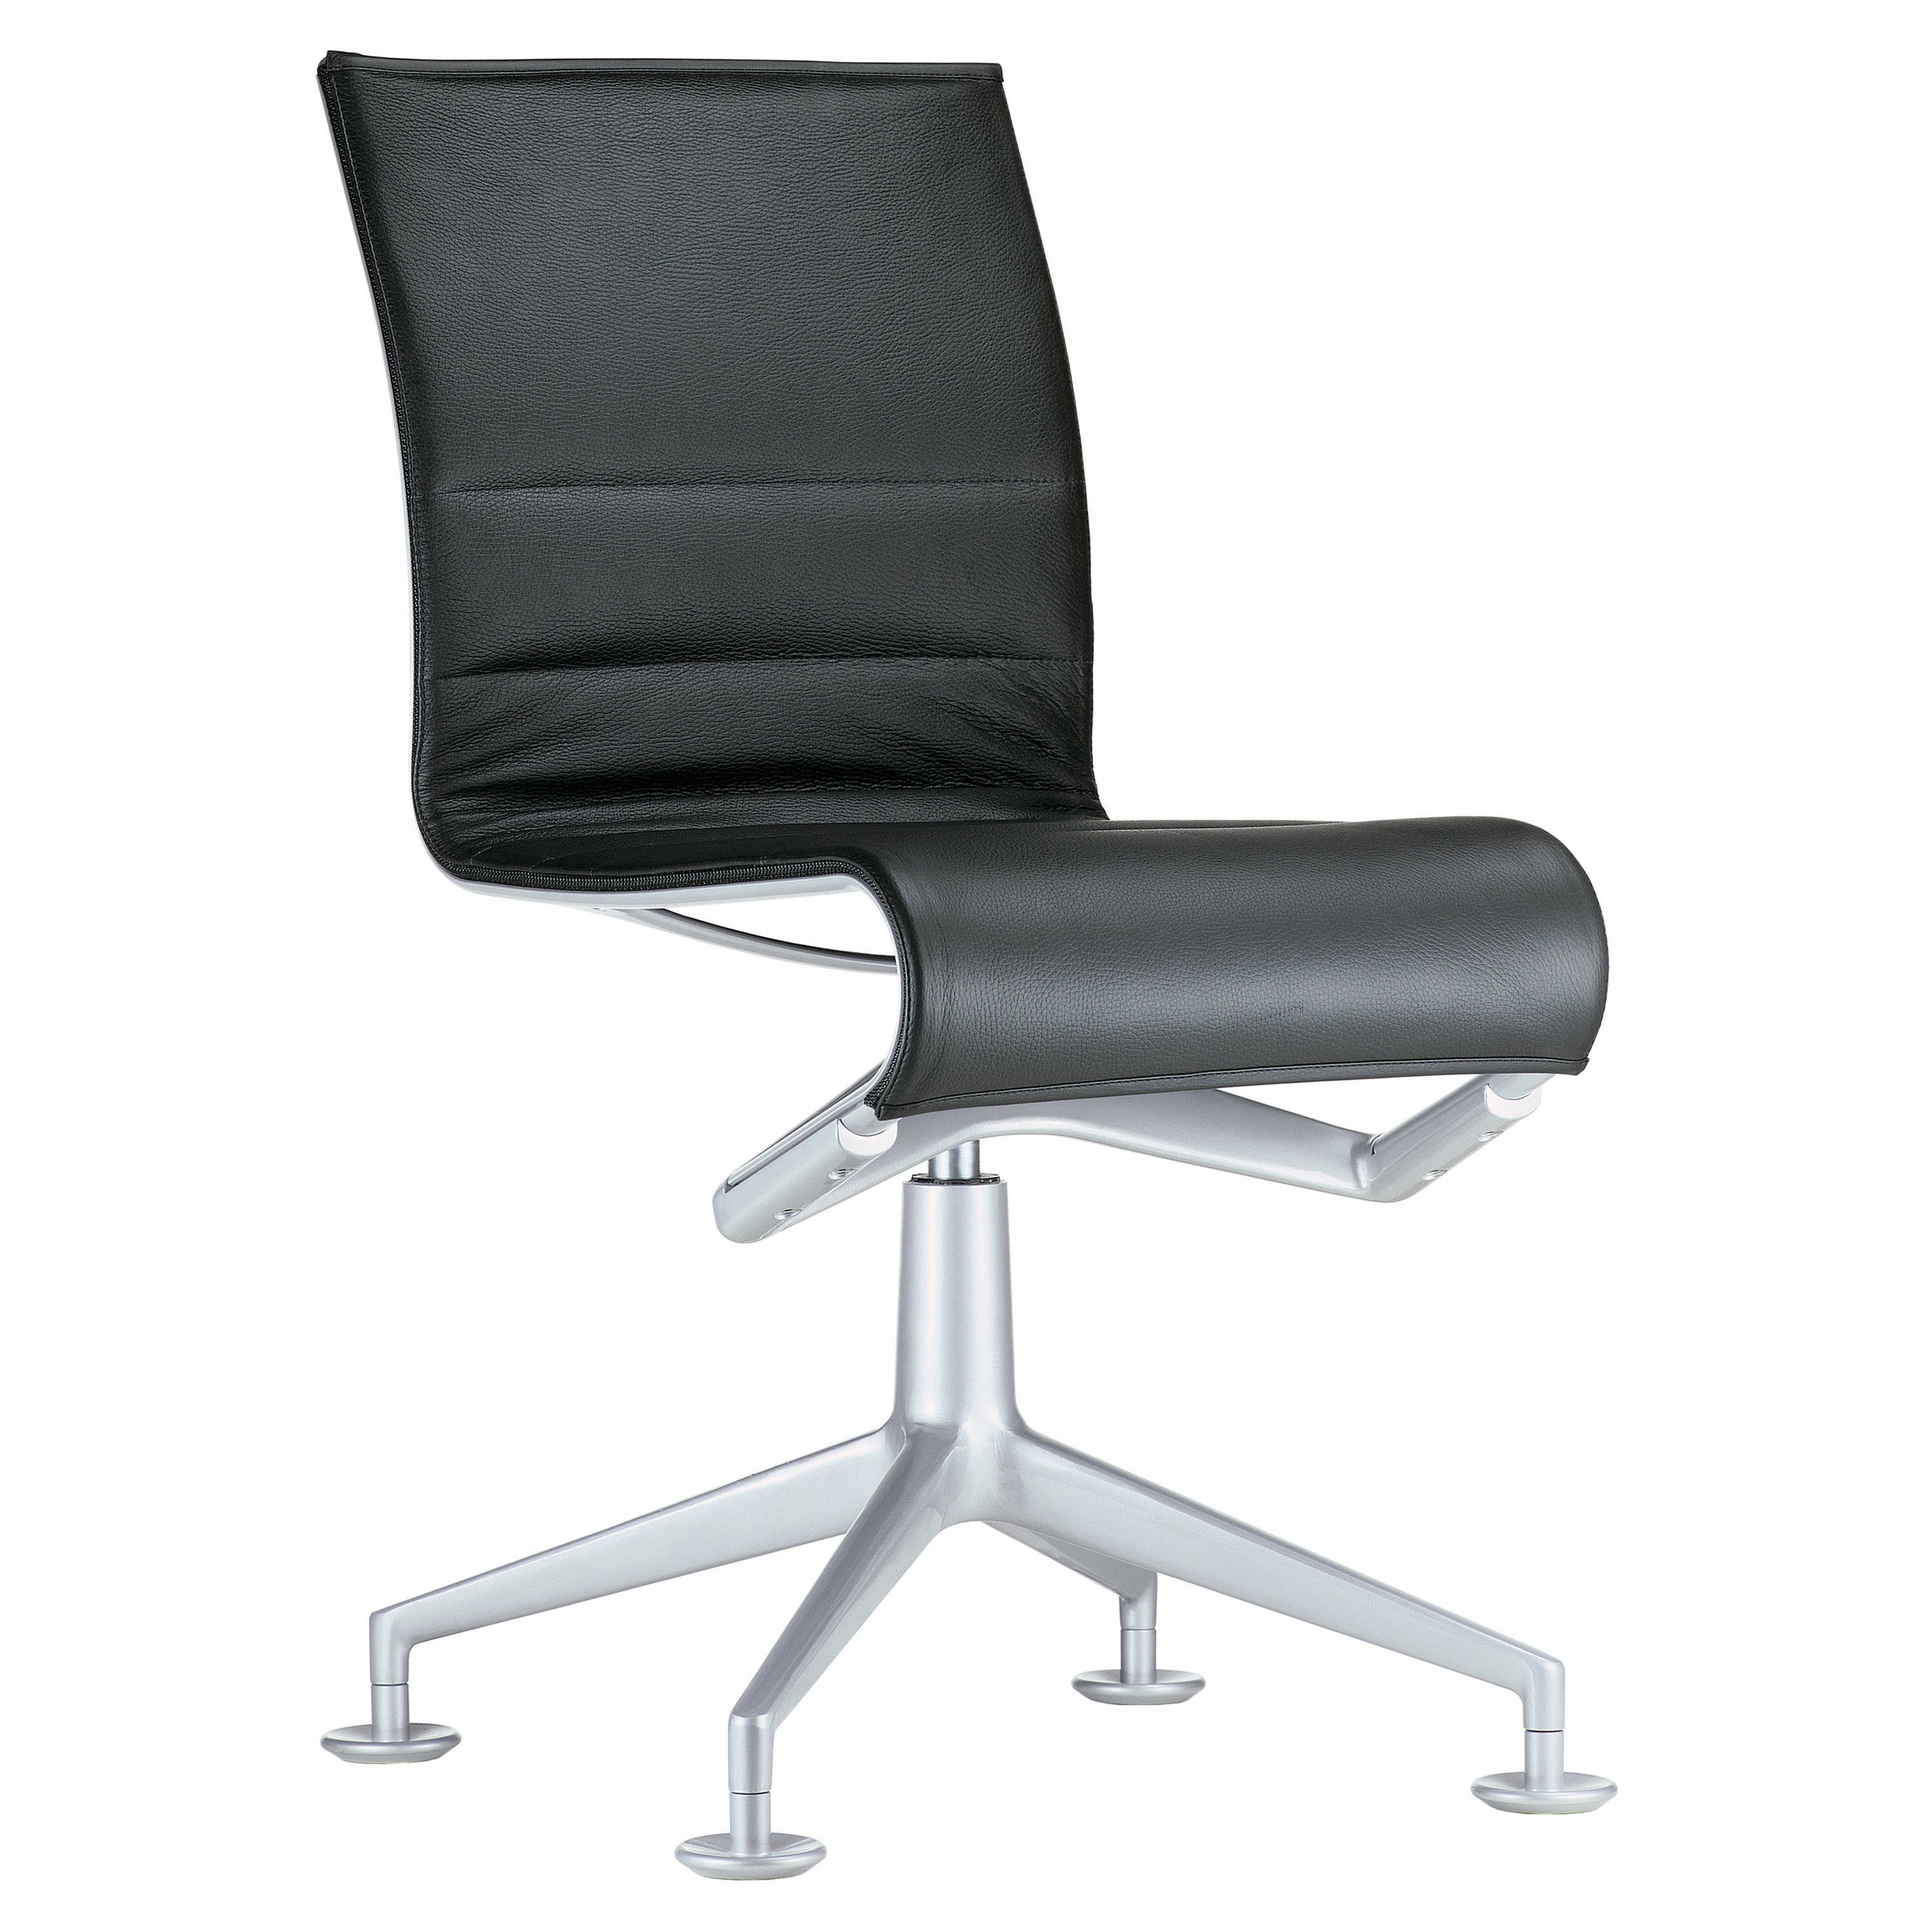 Alias 436 Meetingframe 44, Stuhl mit schwarzem Sitz und grau lackiertem Aluminiumrahmen im Angebot